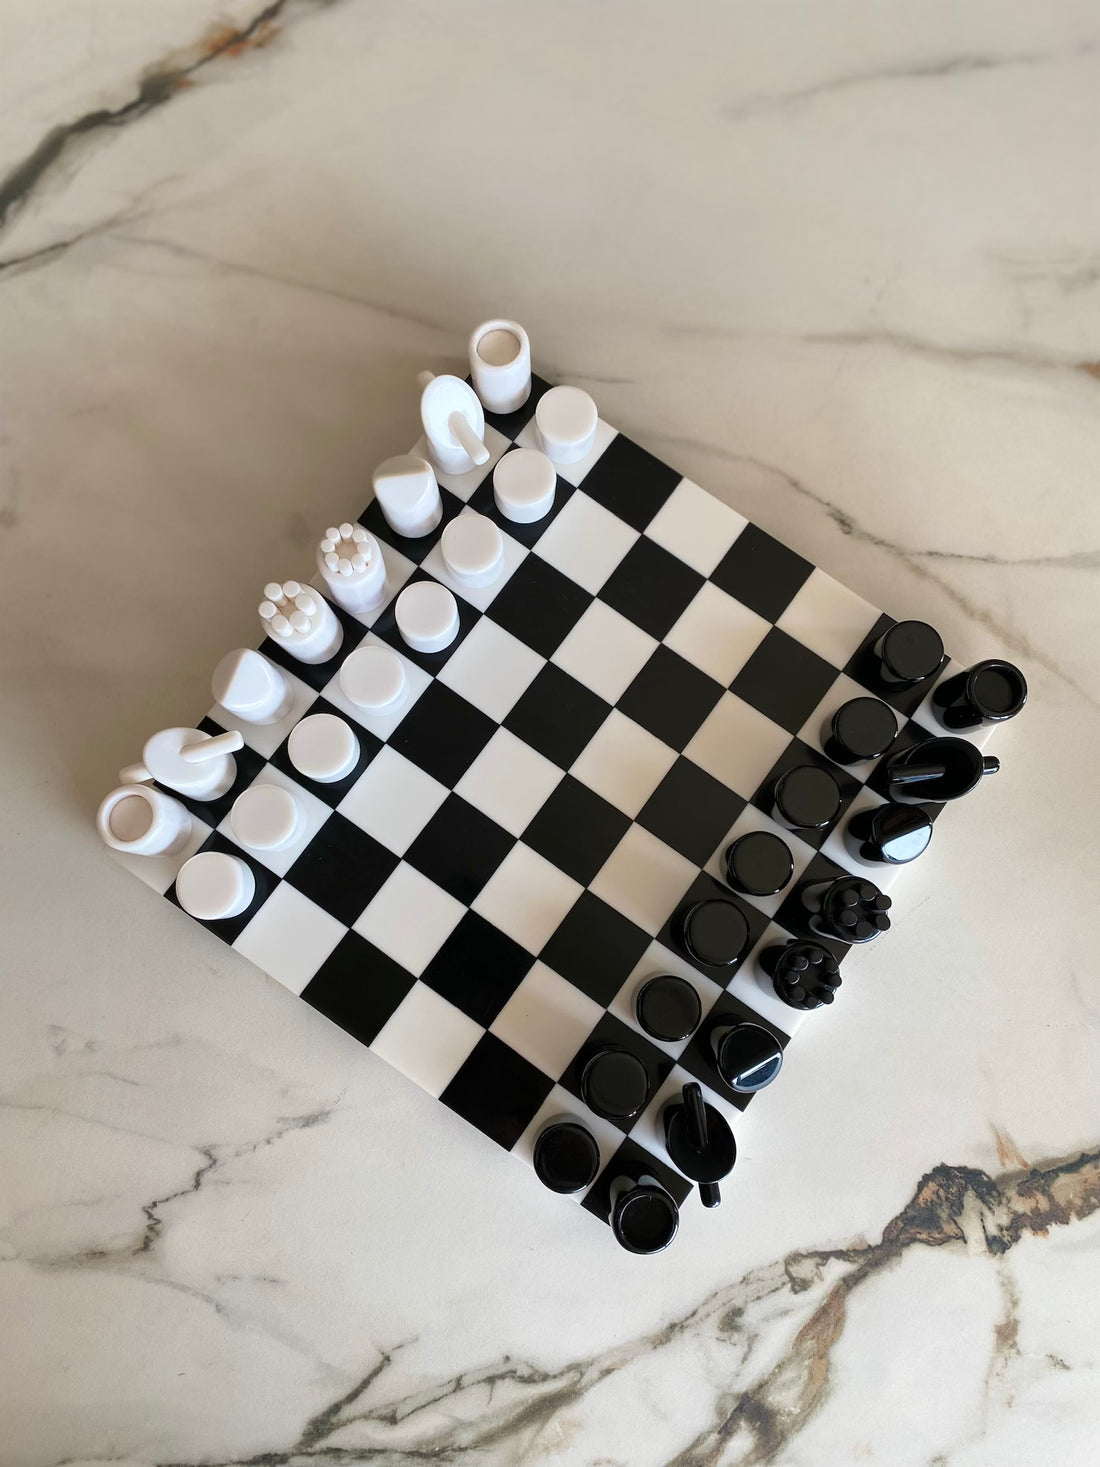 Carlo Chess Set